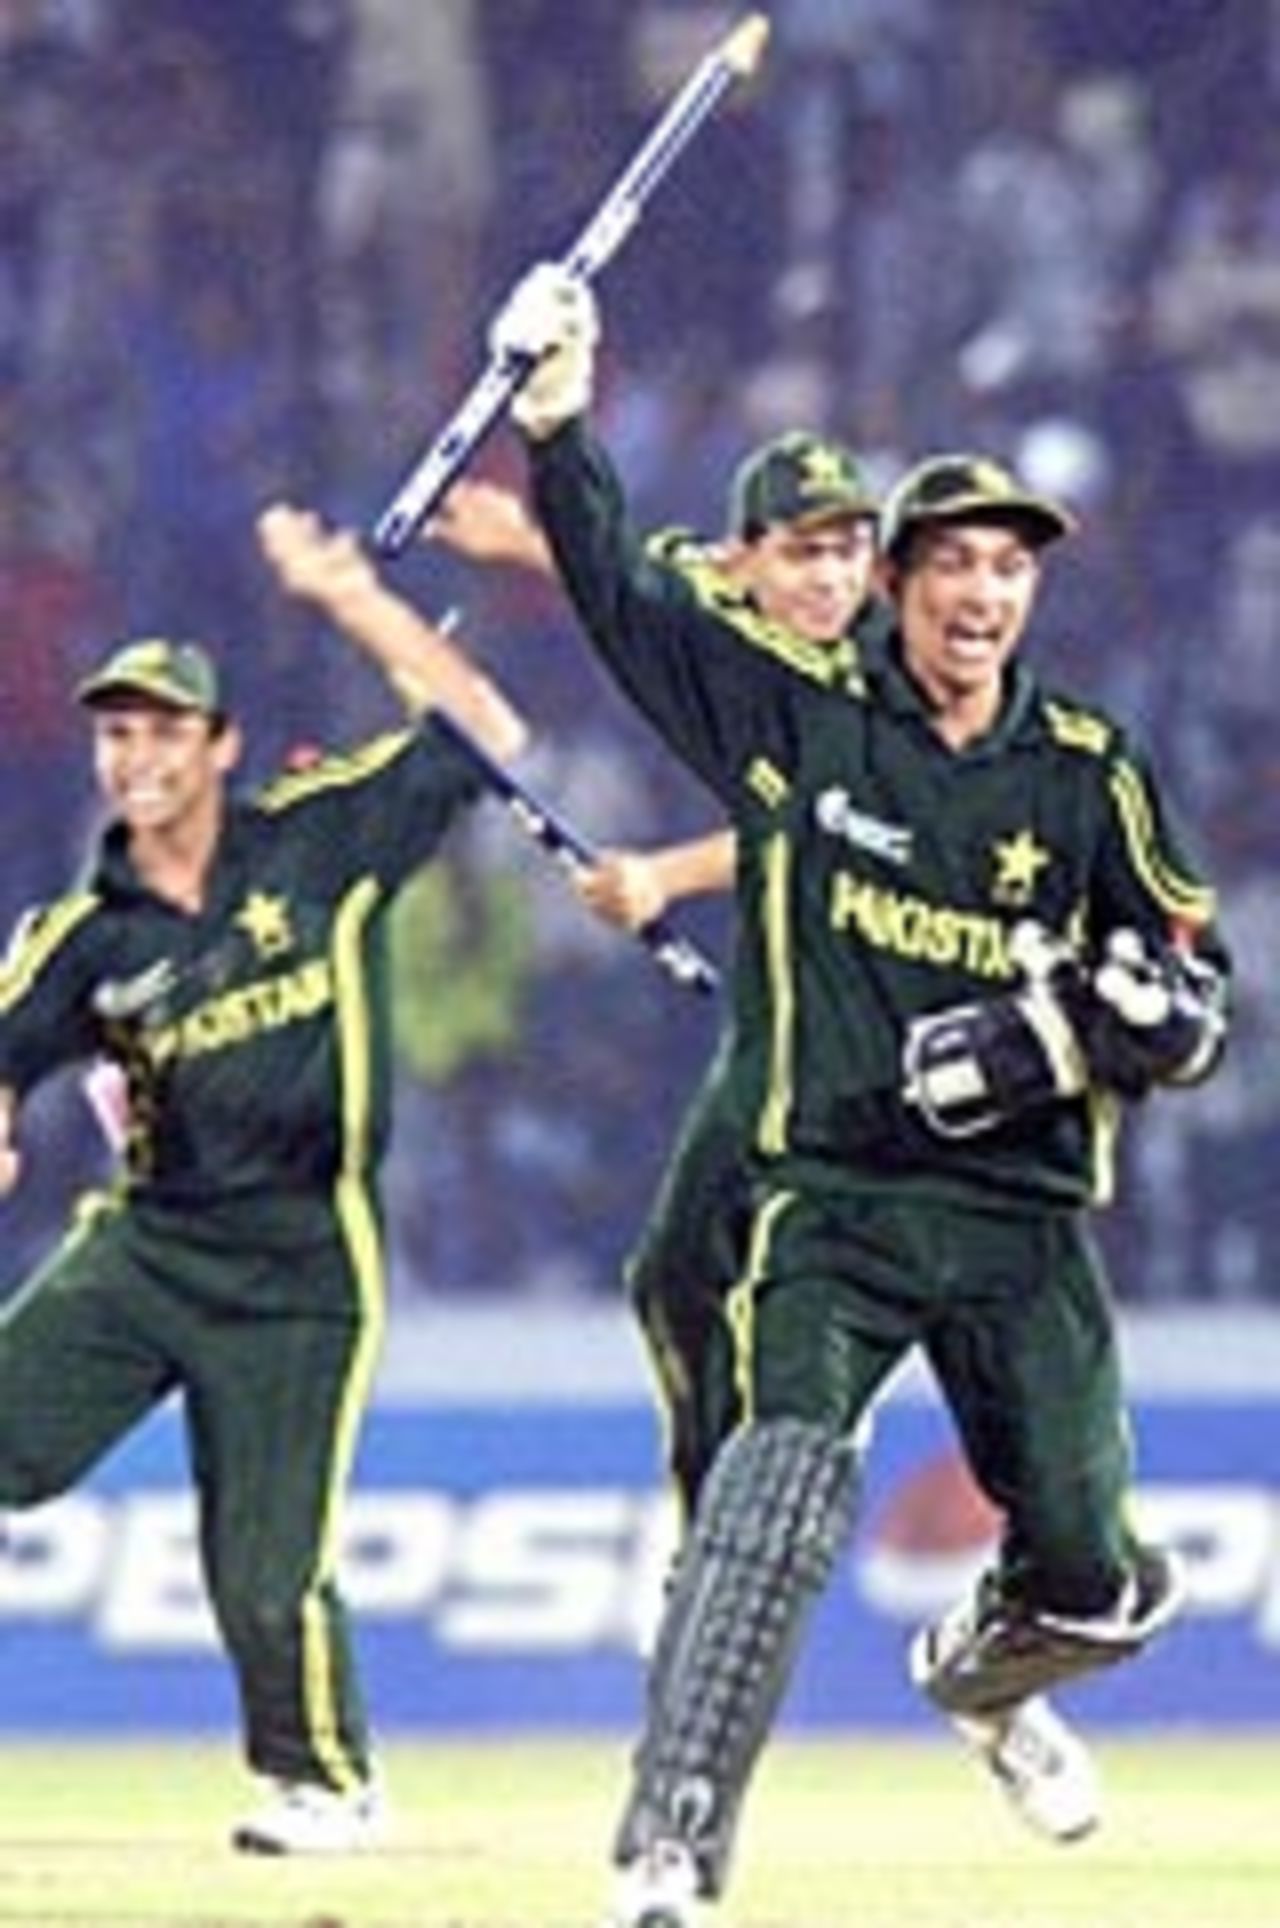 Pakistan celebrate winning the U19 World Cup, March 5, 2004